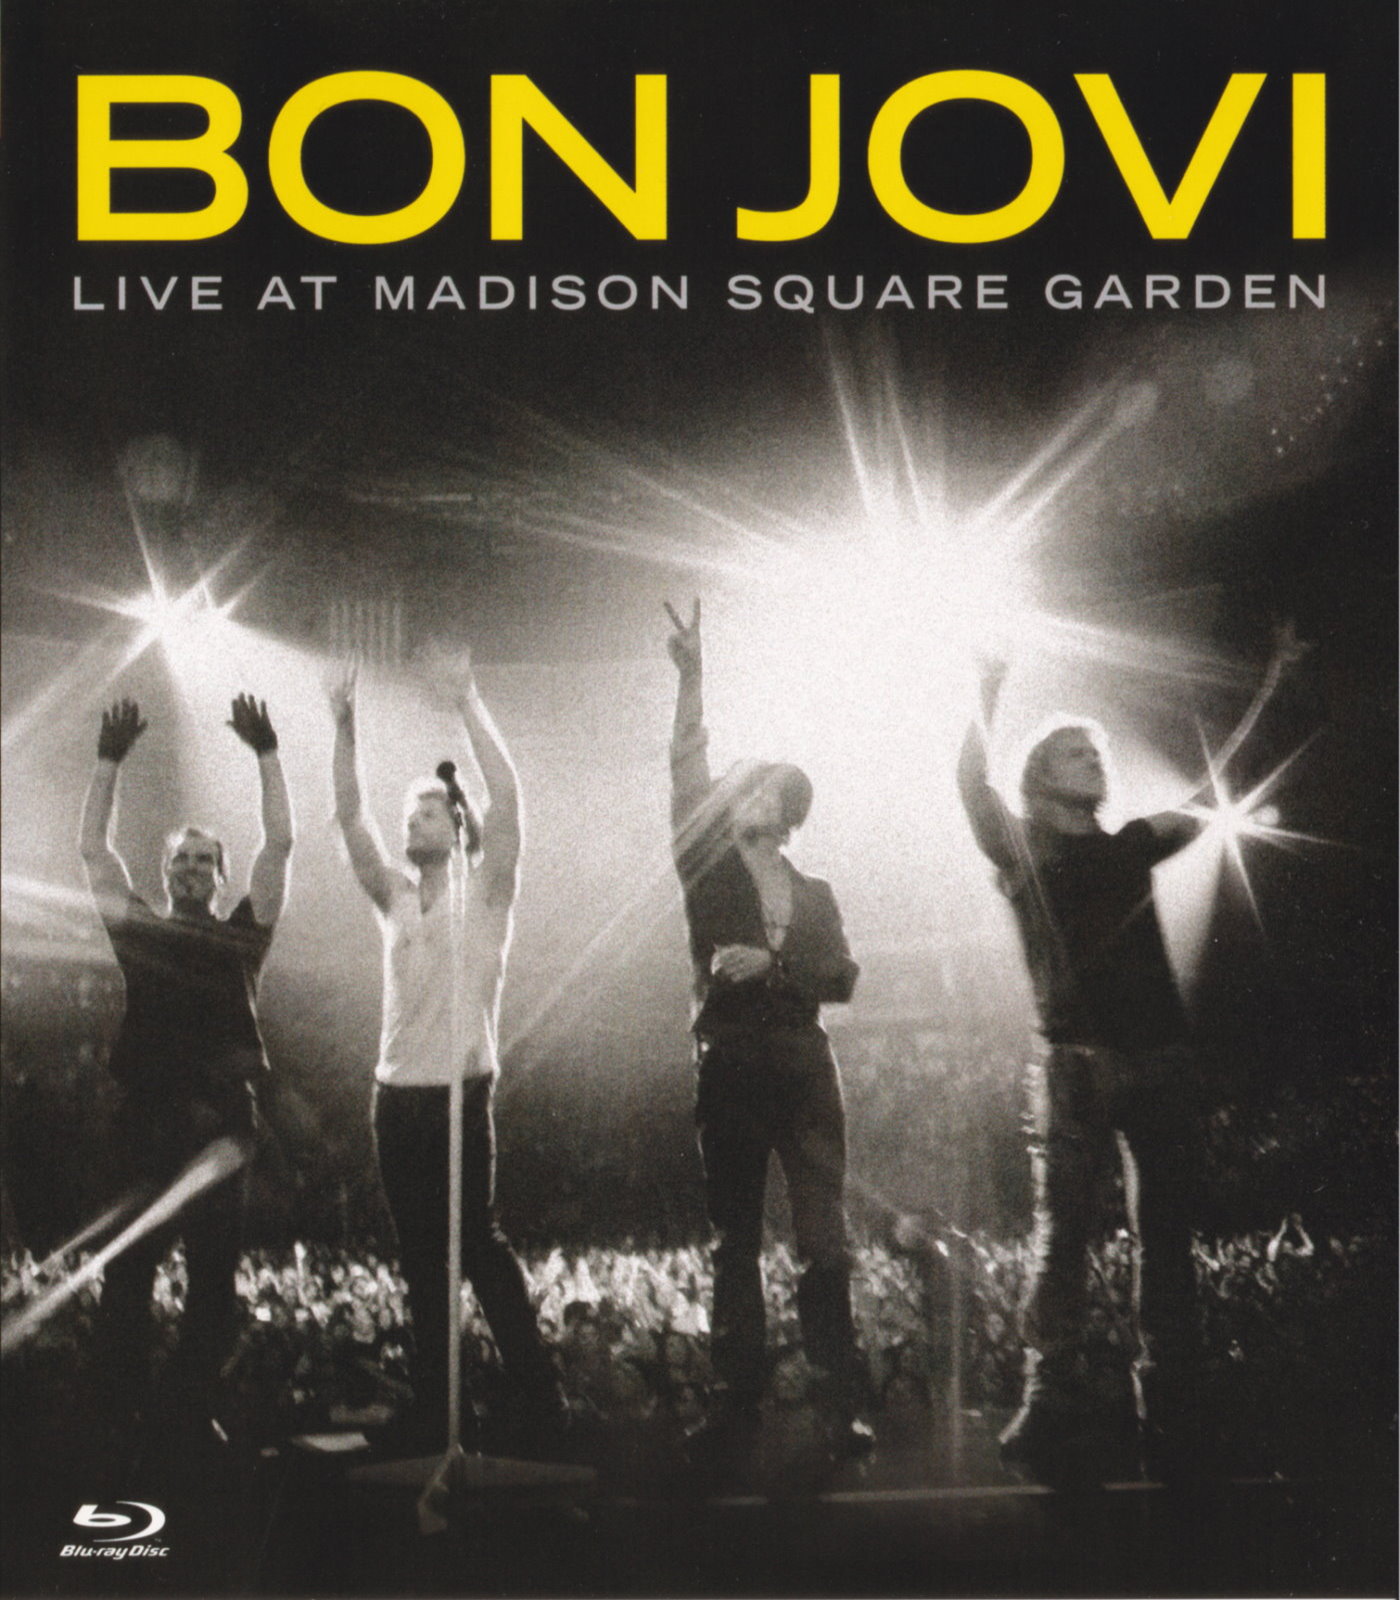 Cover - Bon Jovi - Live at Madison Square Garden.jpg